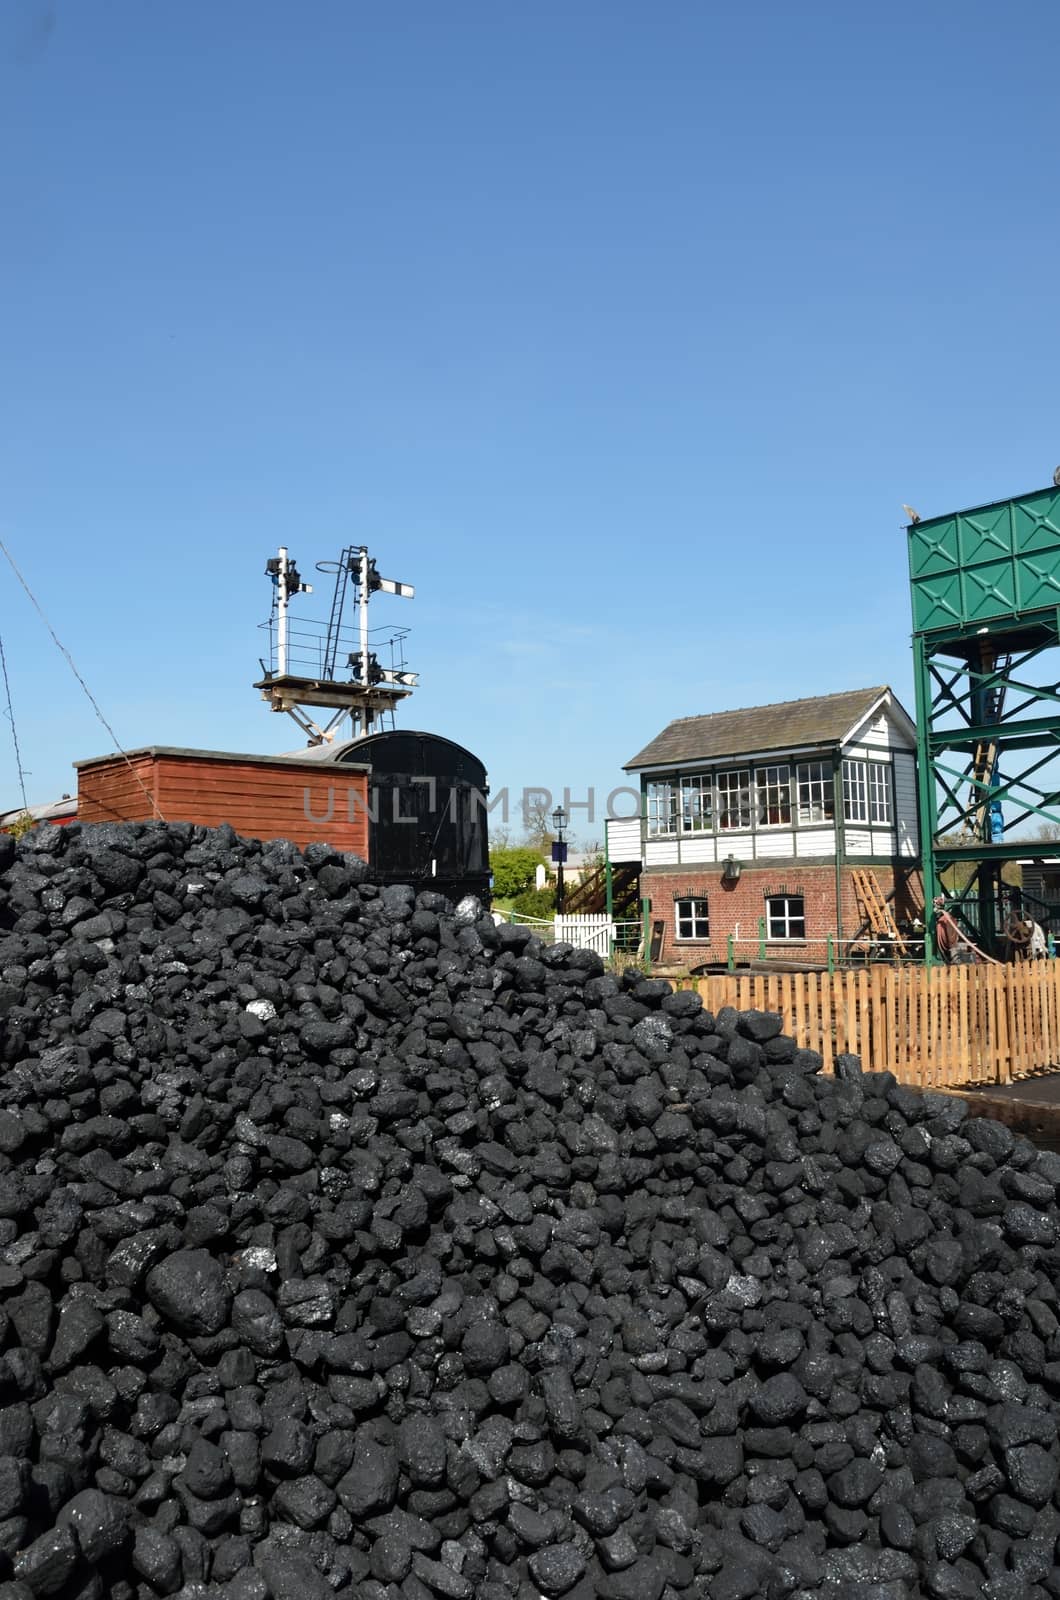 Steam railway scene with coal